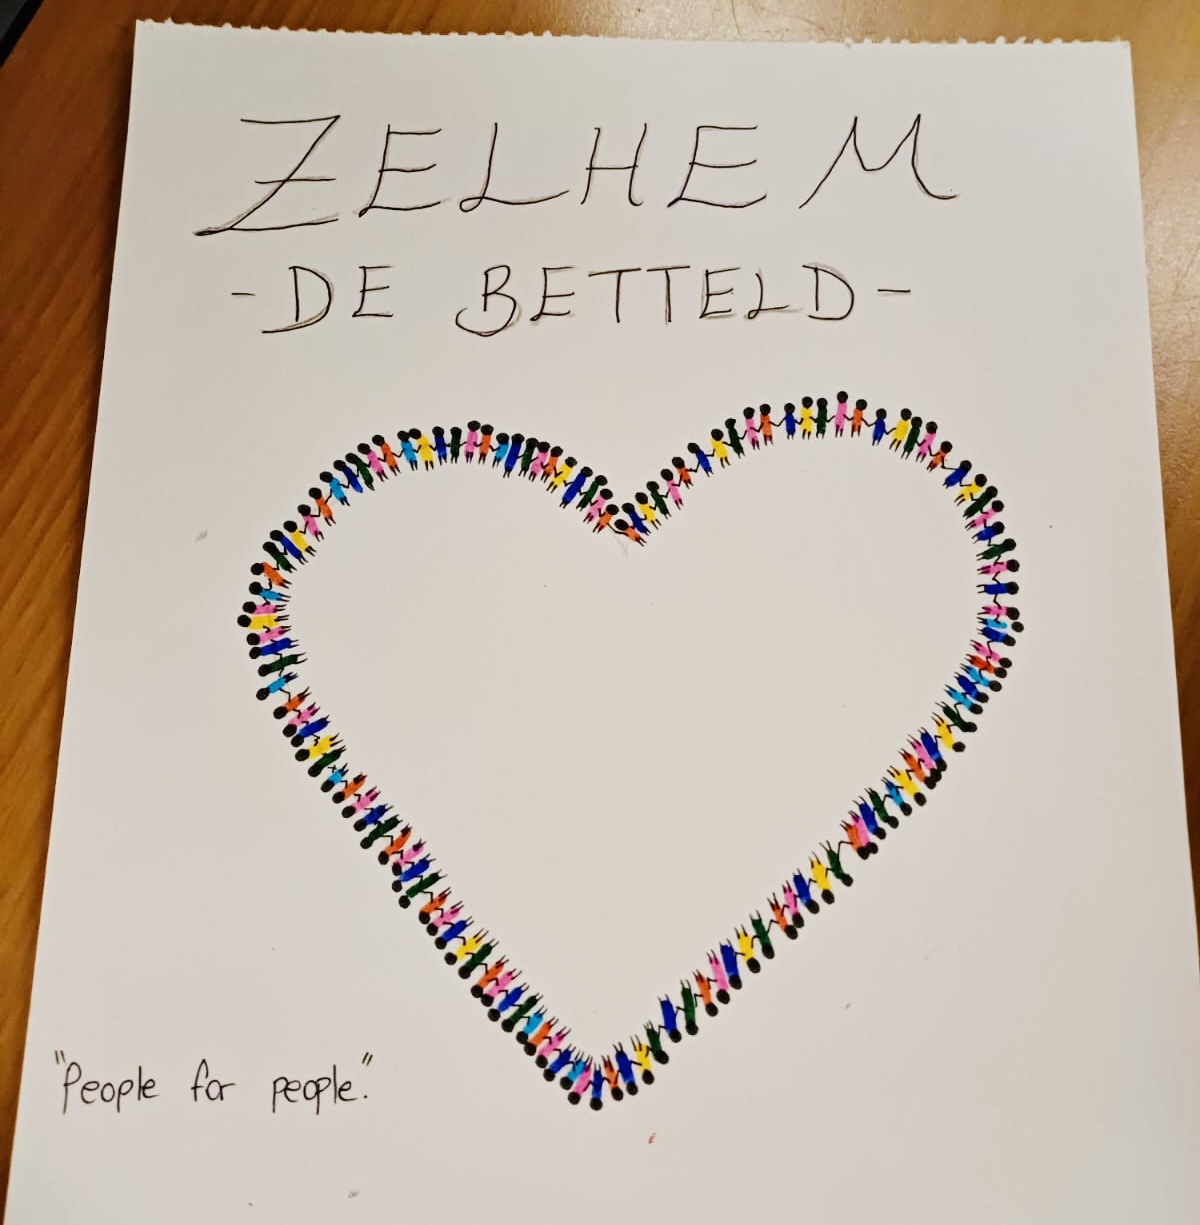 Thank you note from an unaccompanied minor in Zelhem